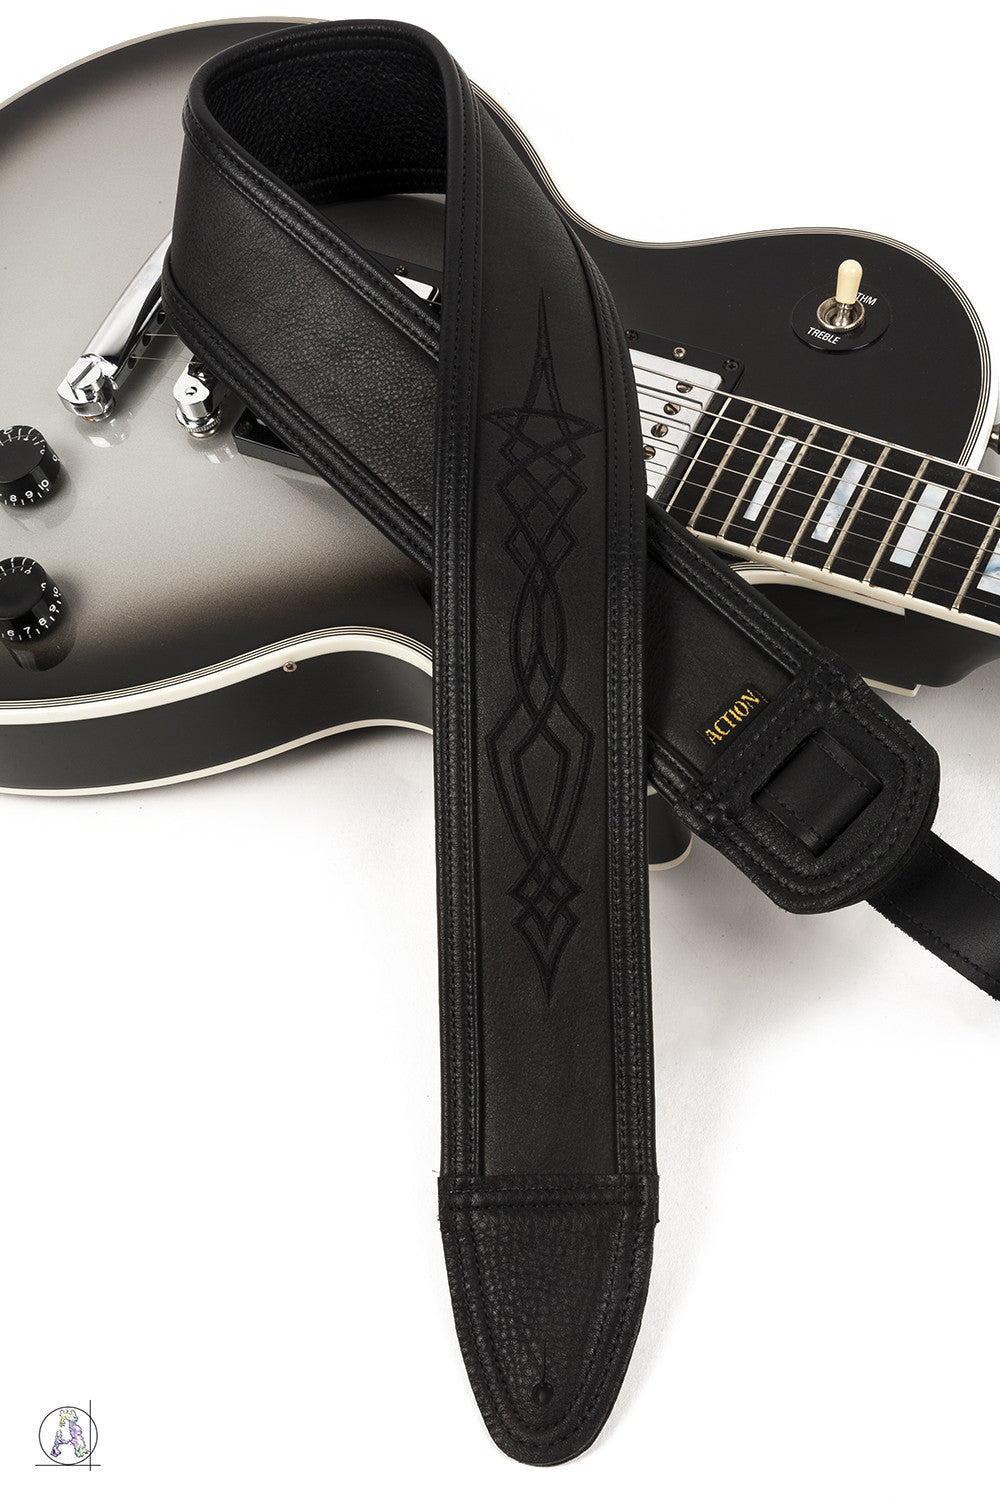 Custom Leather Guitar Strap